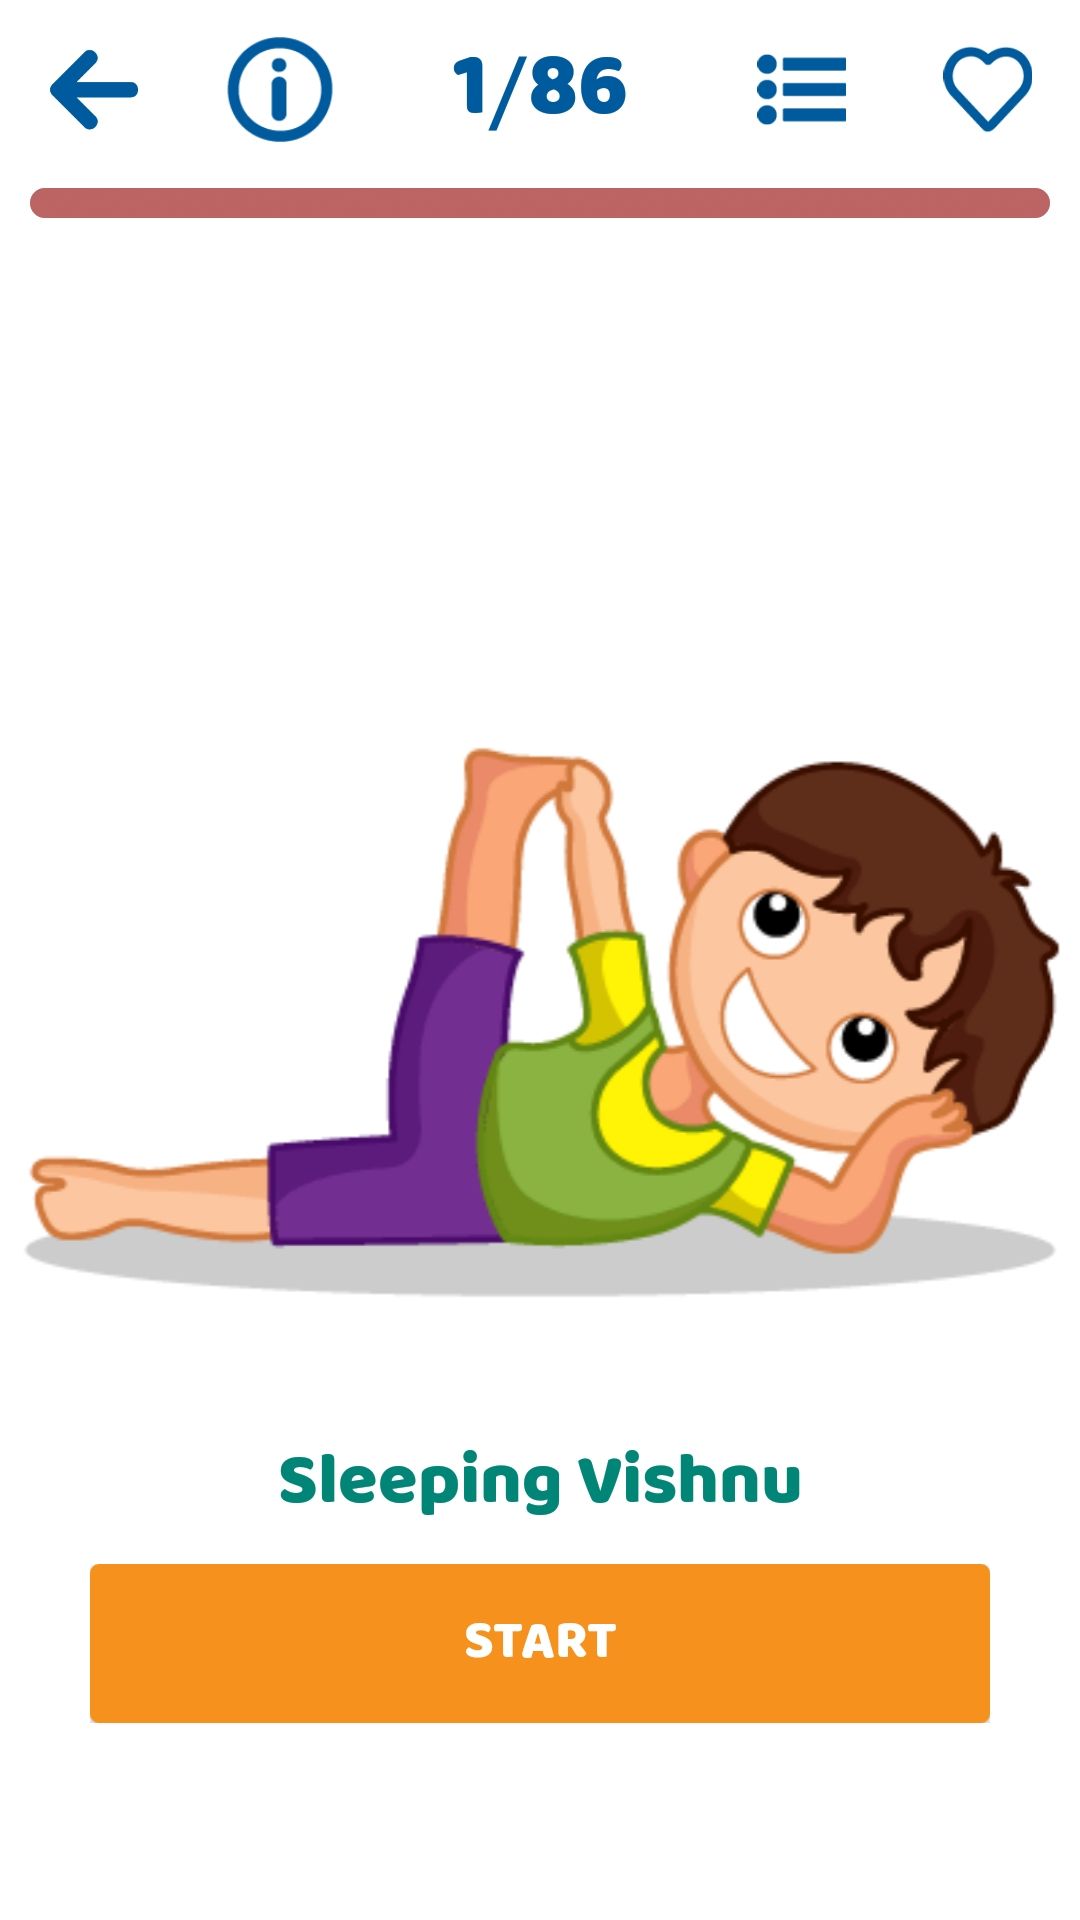 Kids yoga Workout Yoga for Kids and Family mobile app poses